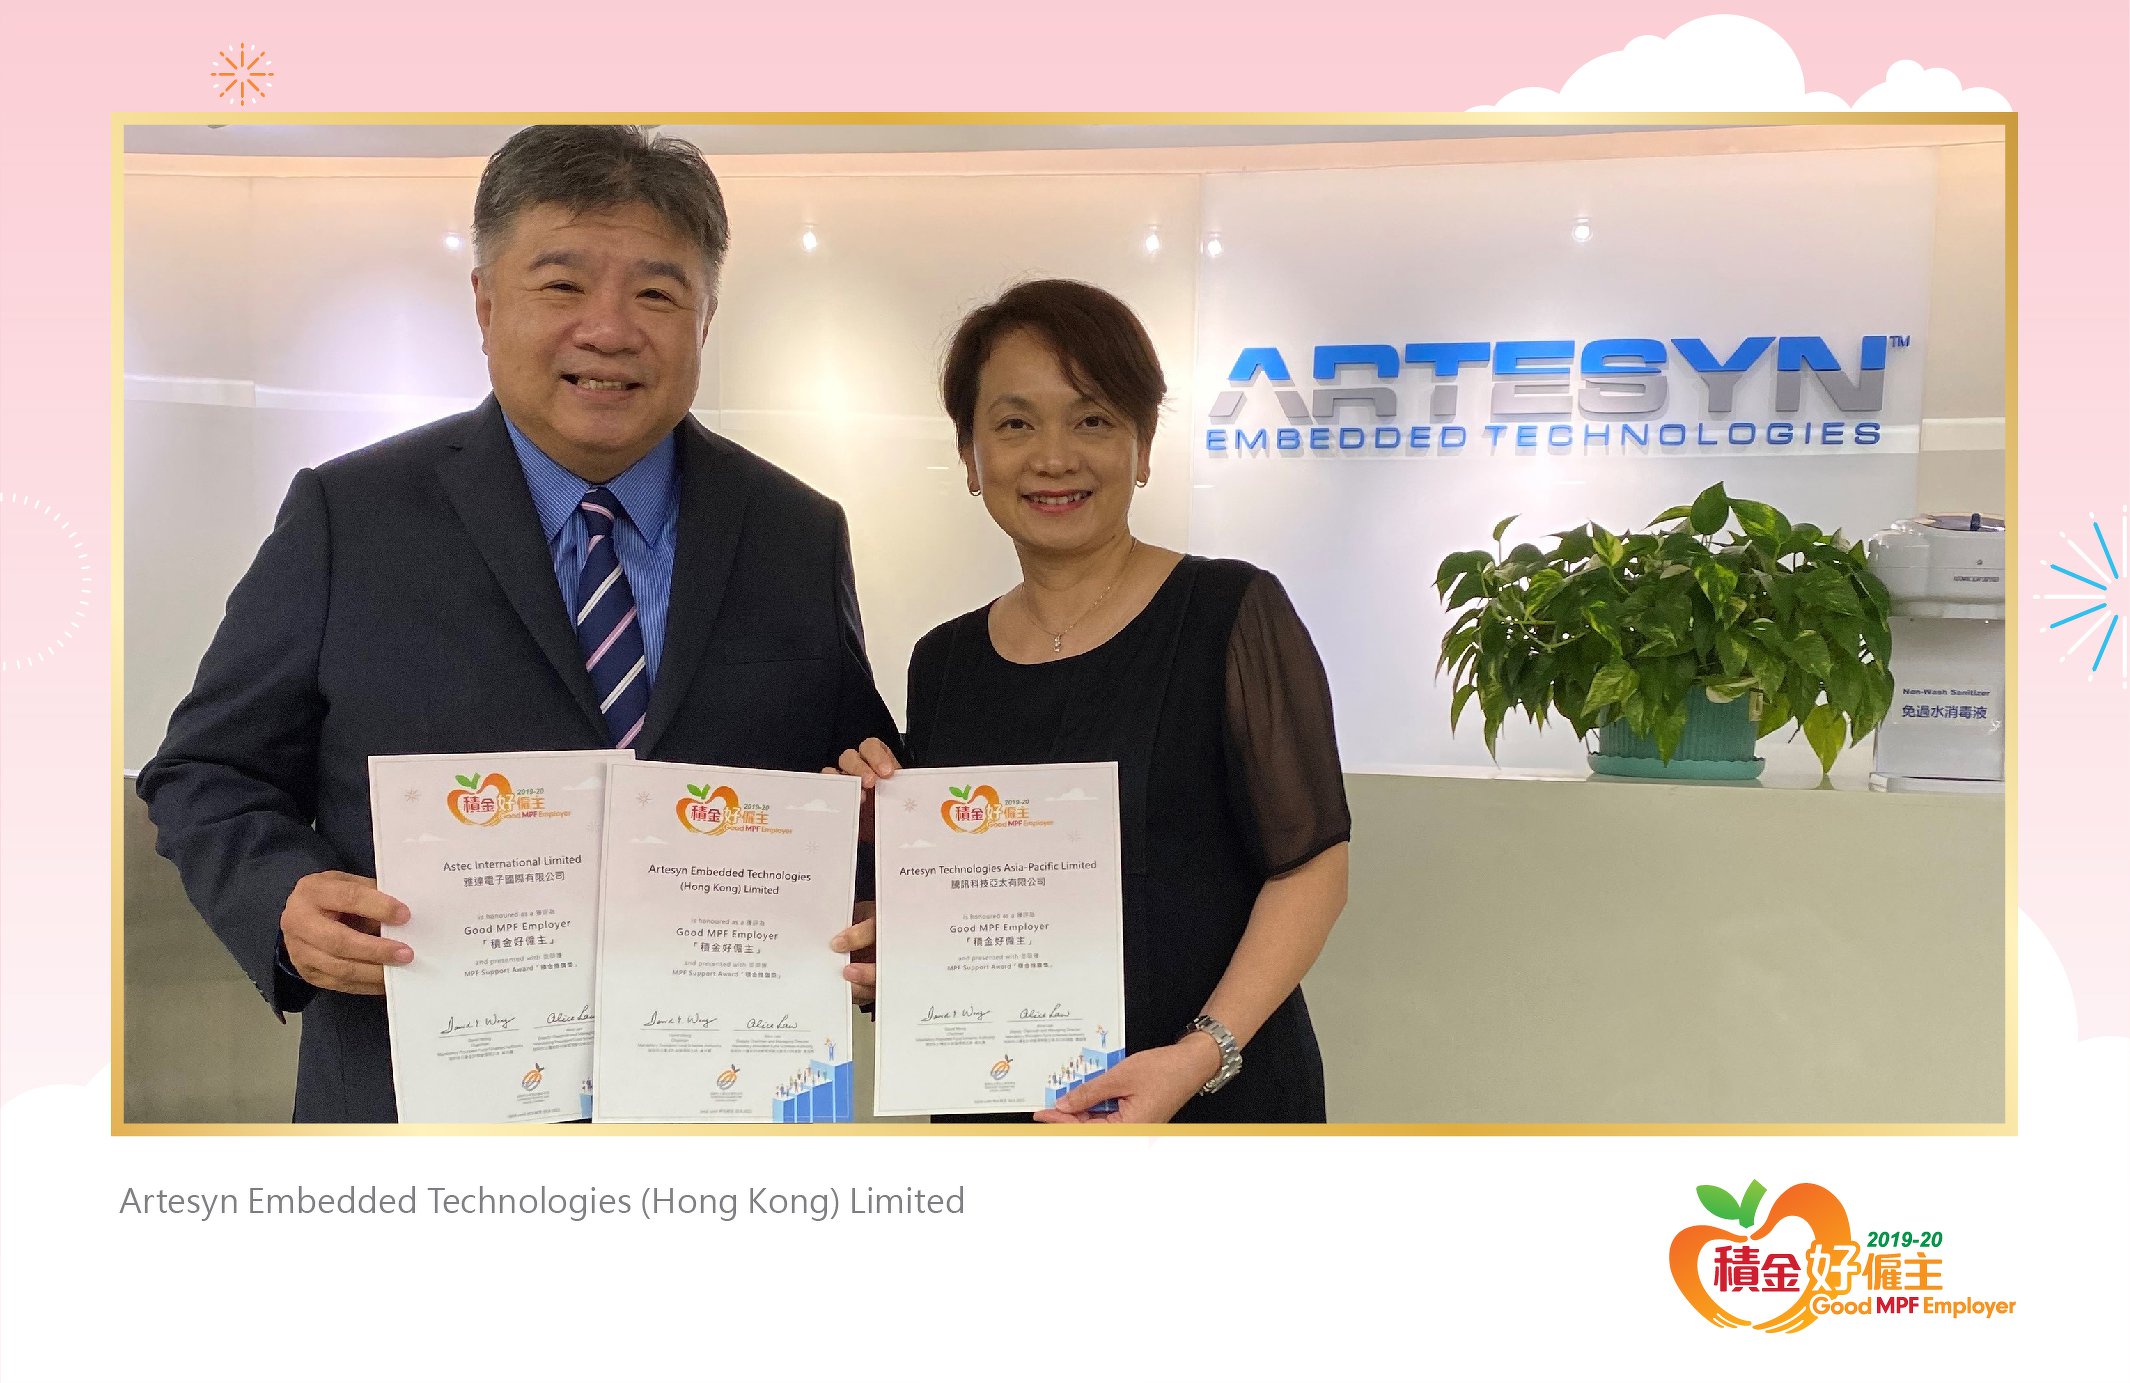 Artesyn Embedded Technologies (Hong Kong) Limited